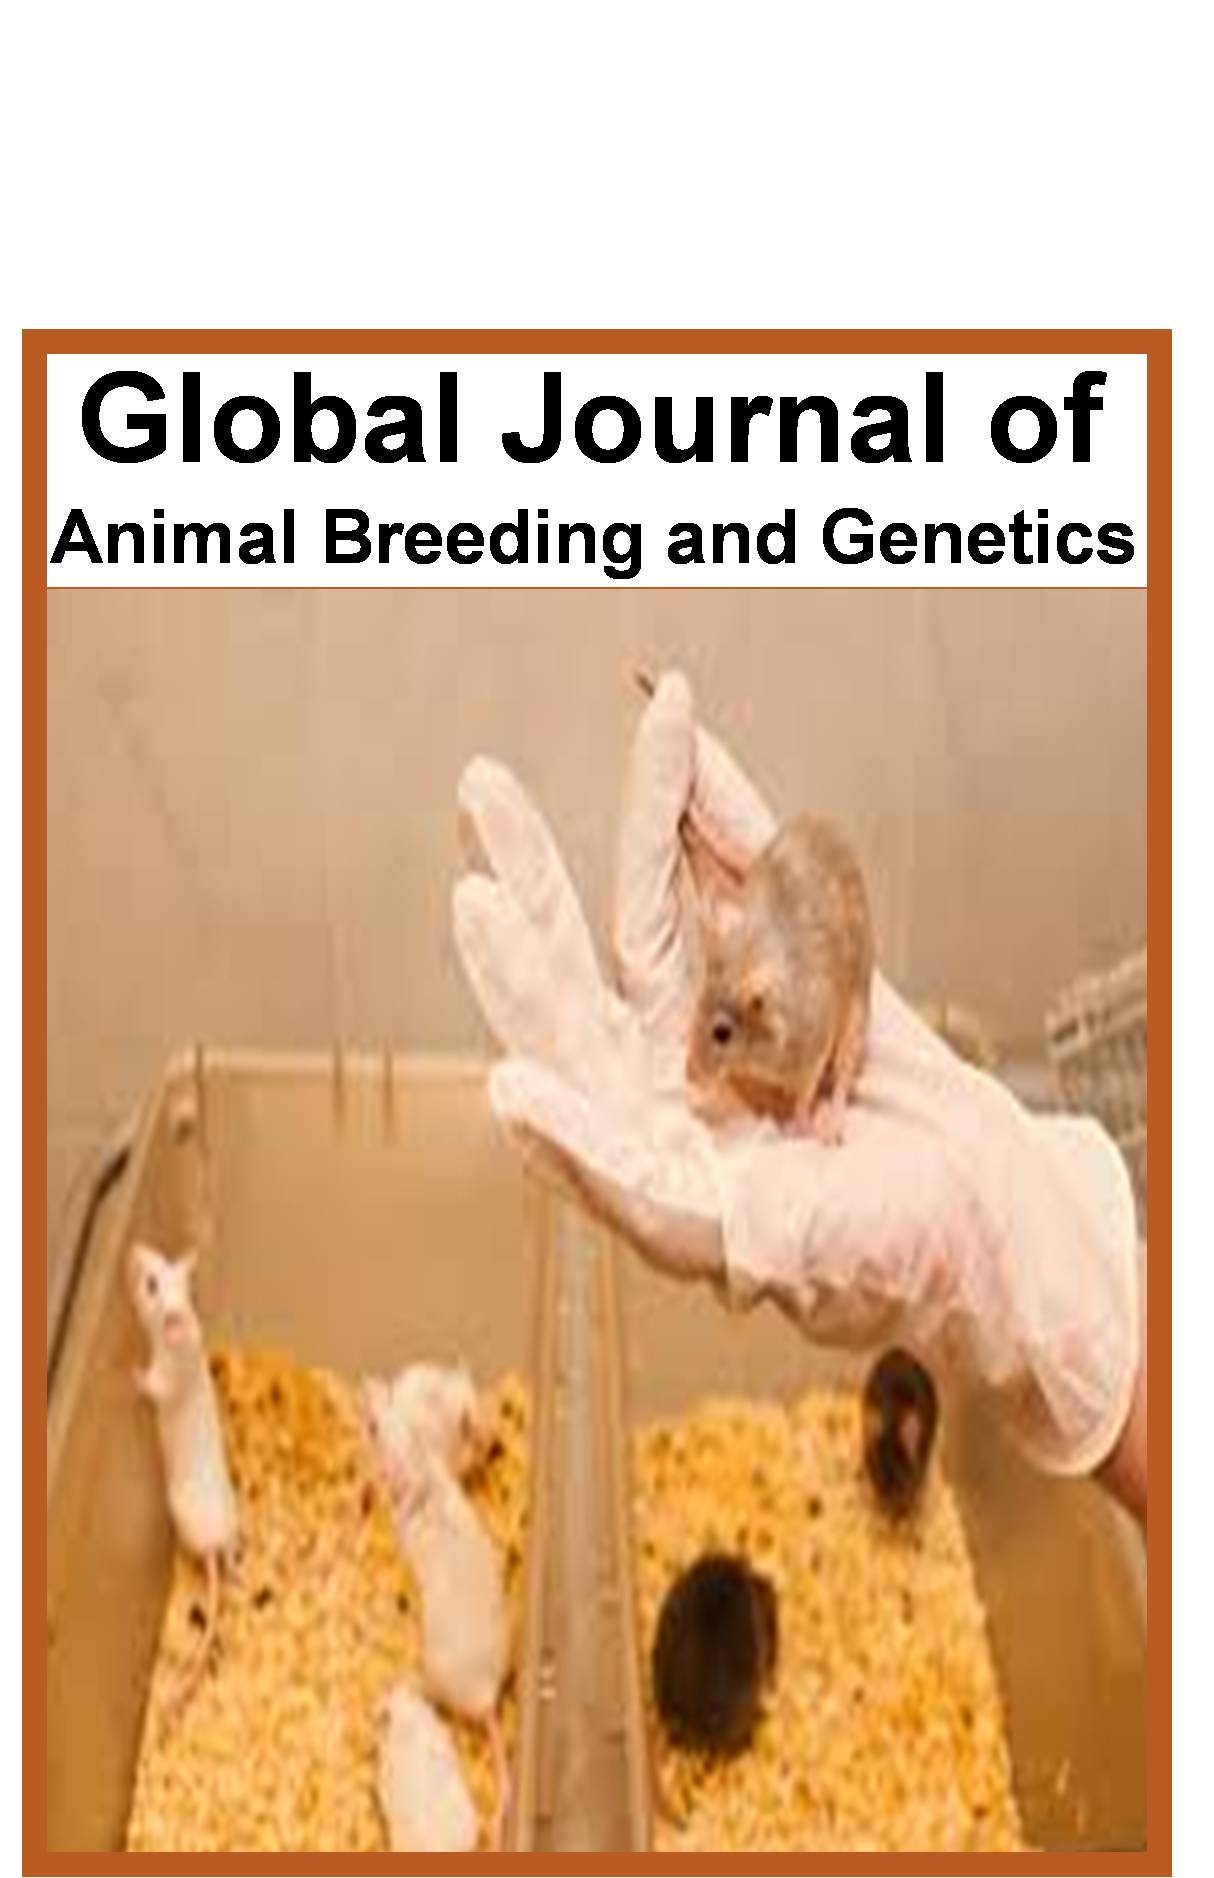 Journal: GLOBAL JOURNAL OF ANIMAL BREEDING AND GENETICS